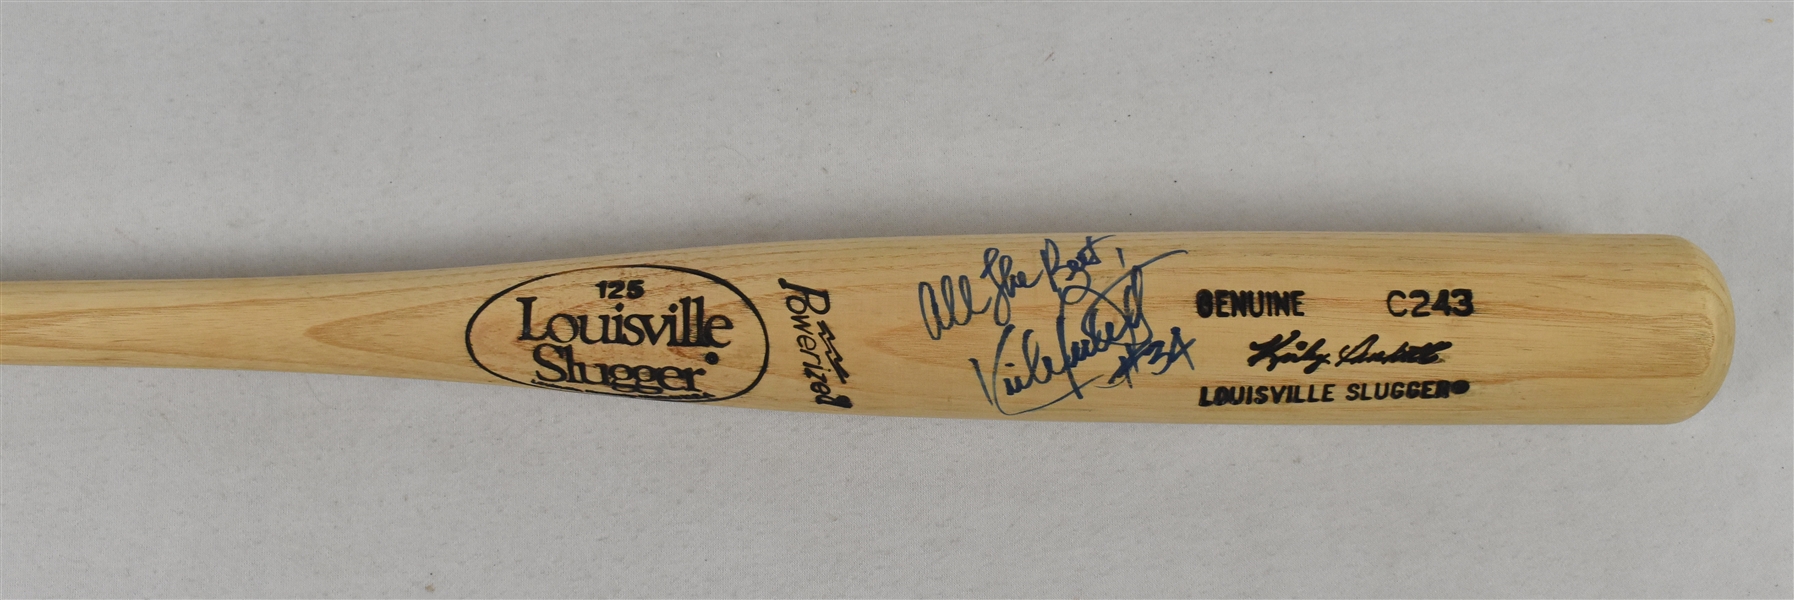 Kirby Puckett Autographed & Inscribed Signature Model C243 Bat